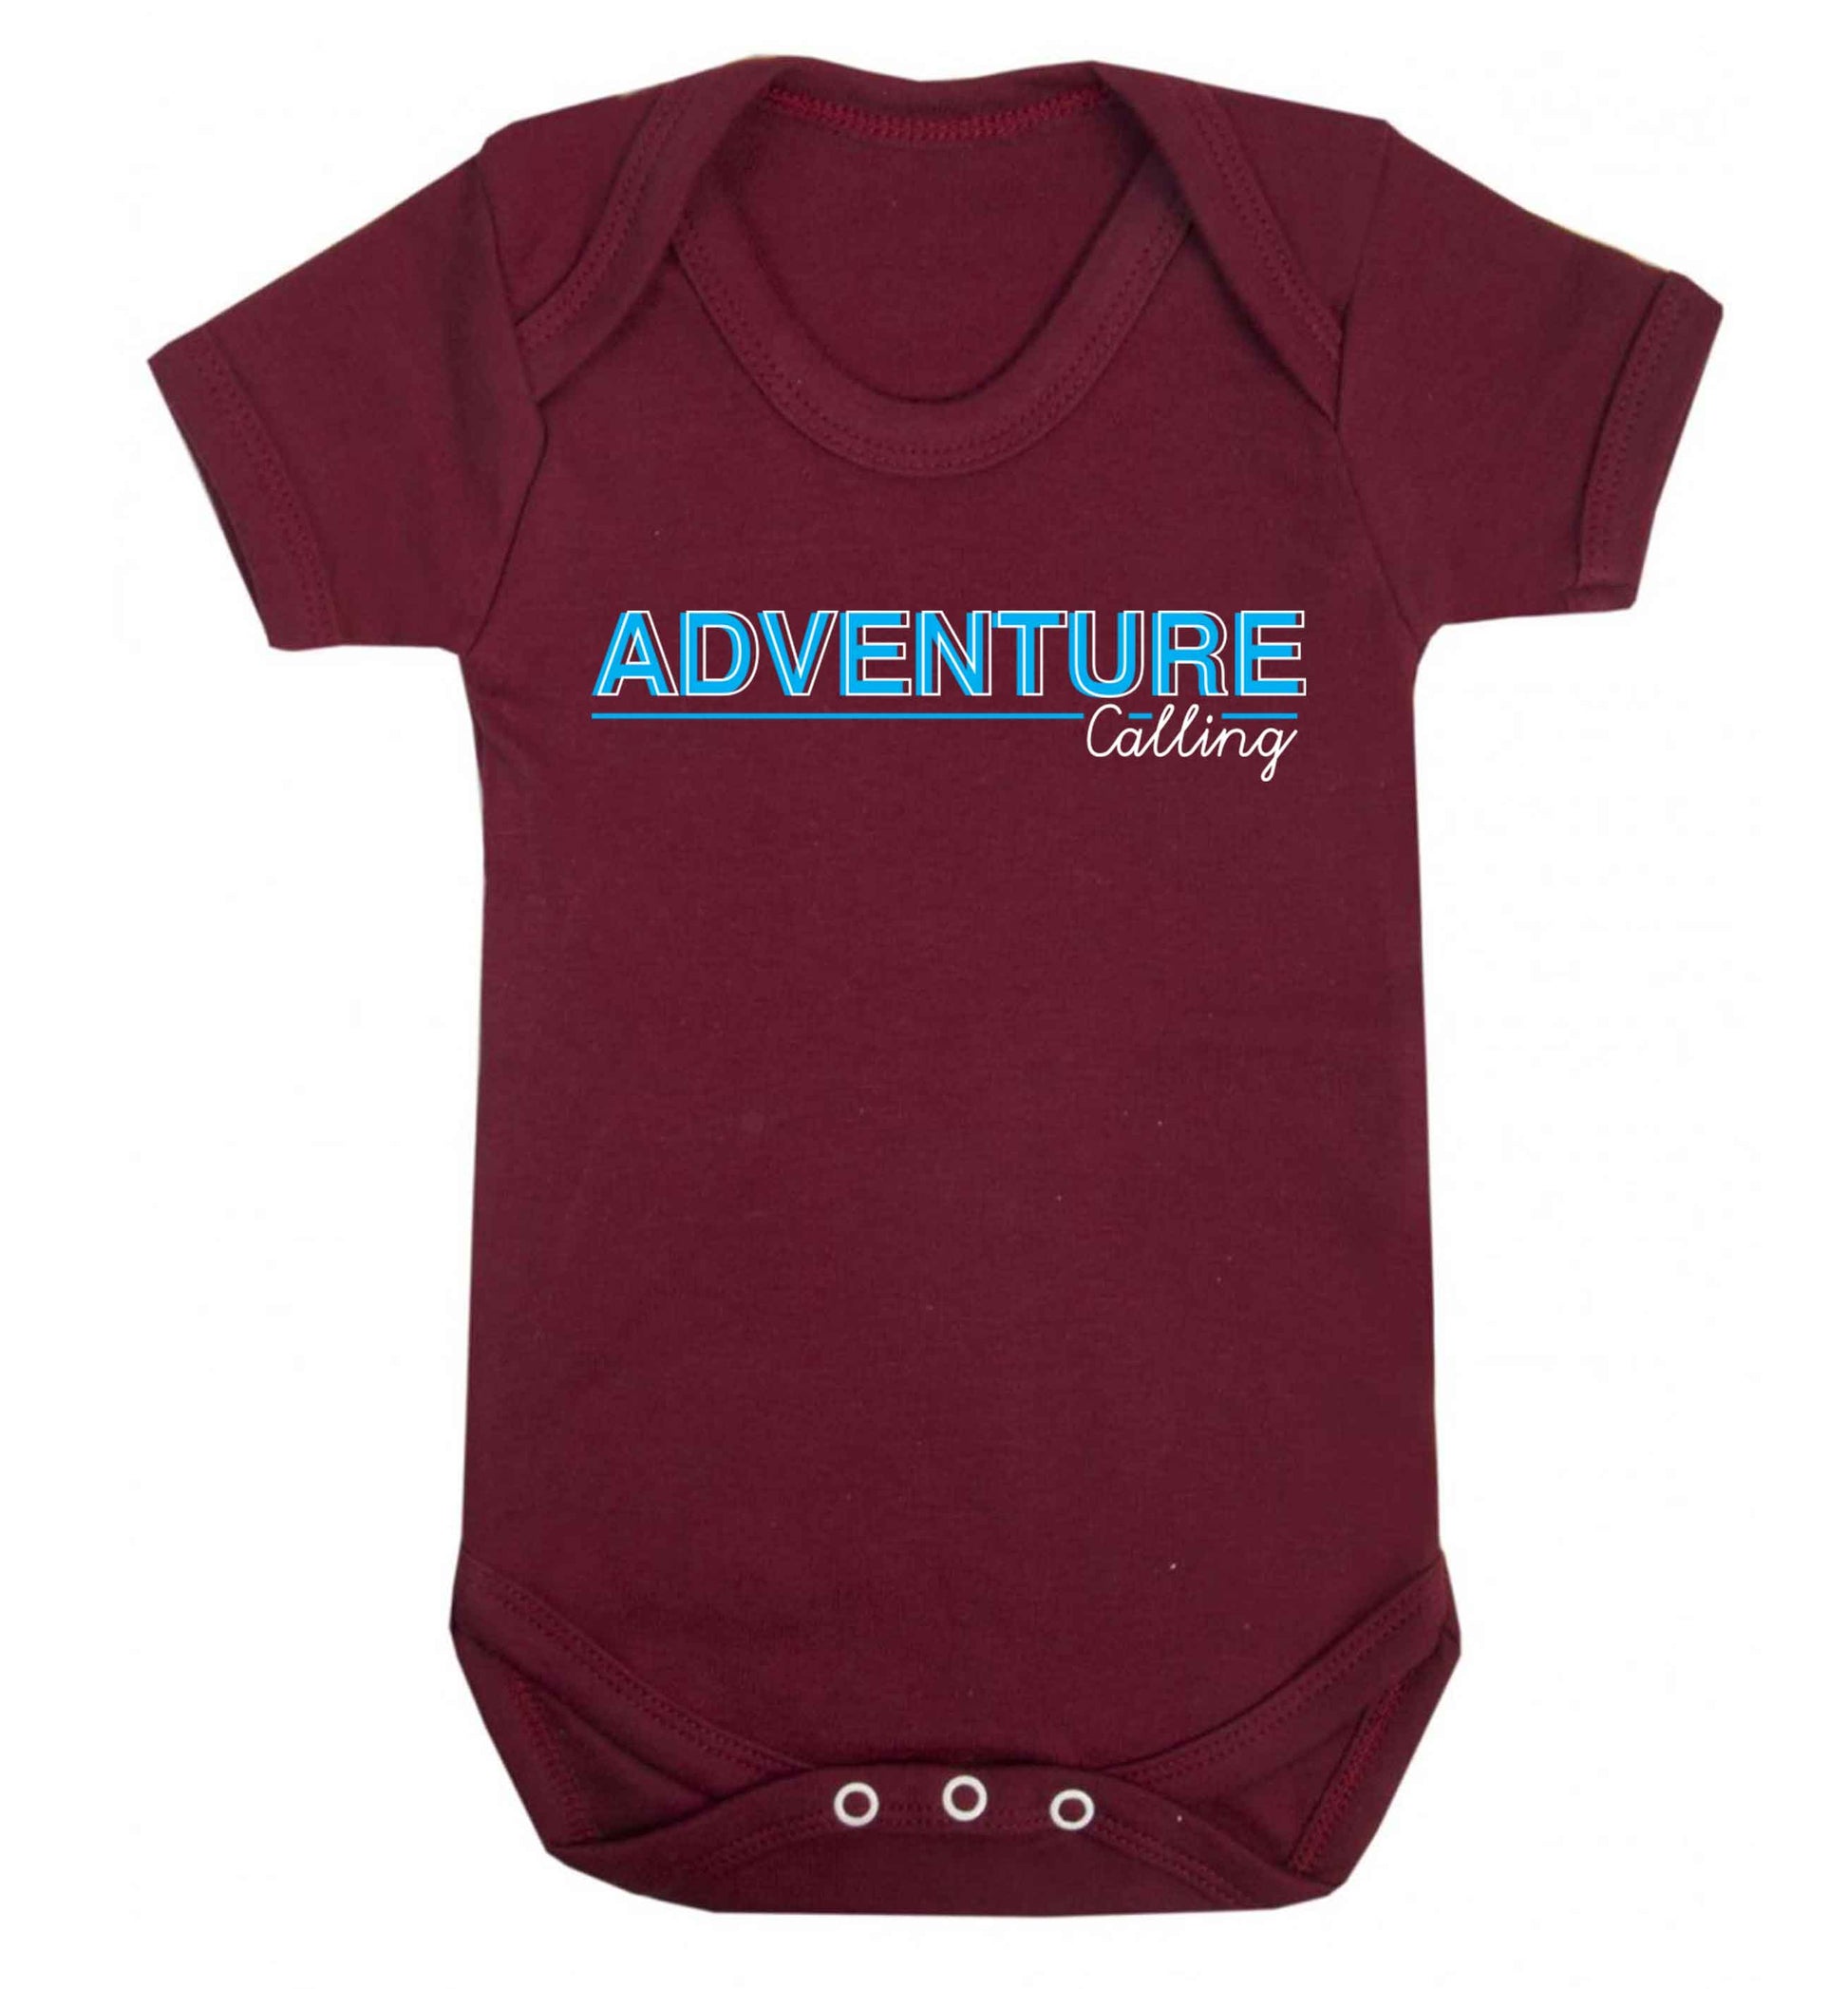 Adventure calling Baby Vest maroon 18-24 months